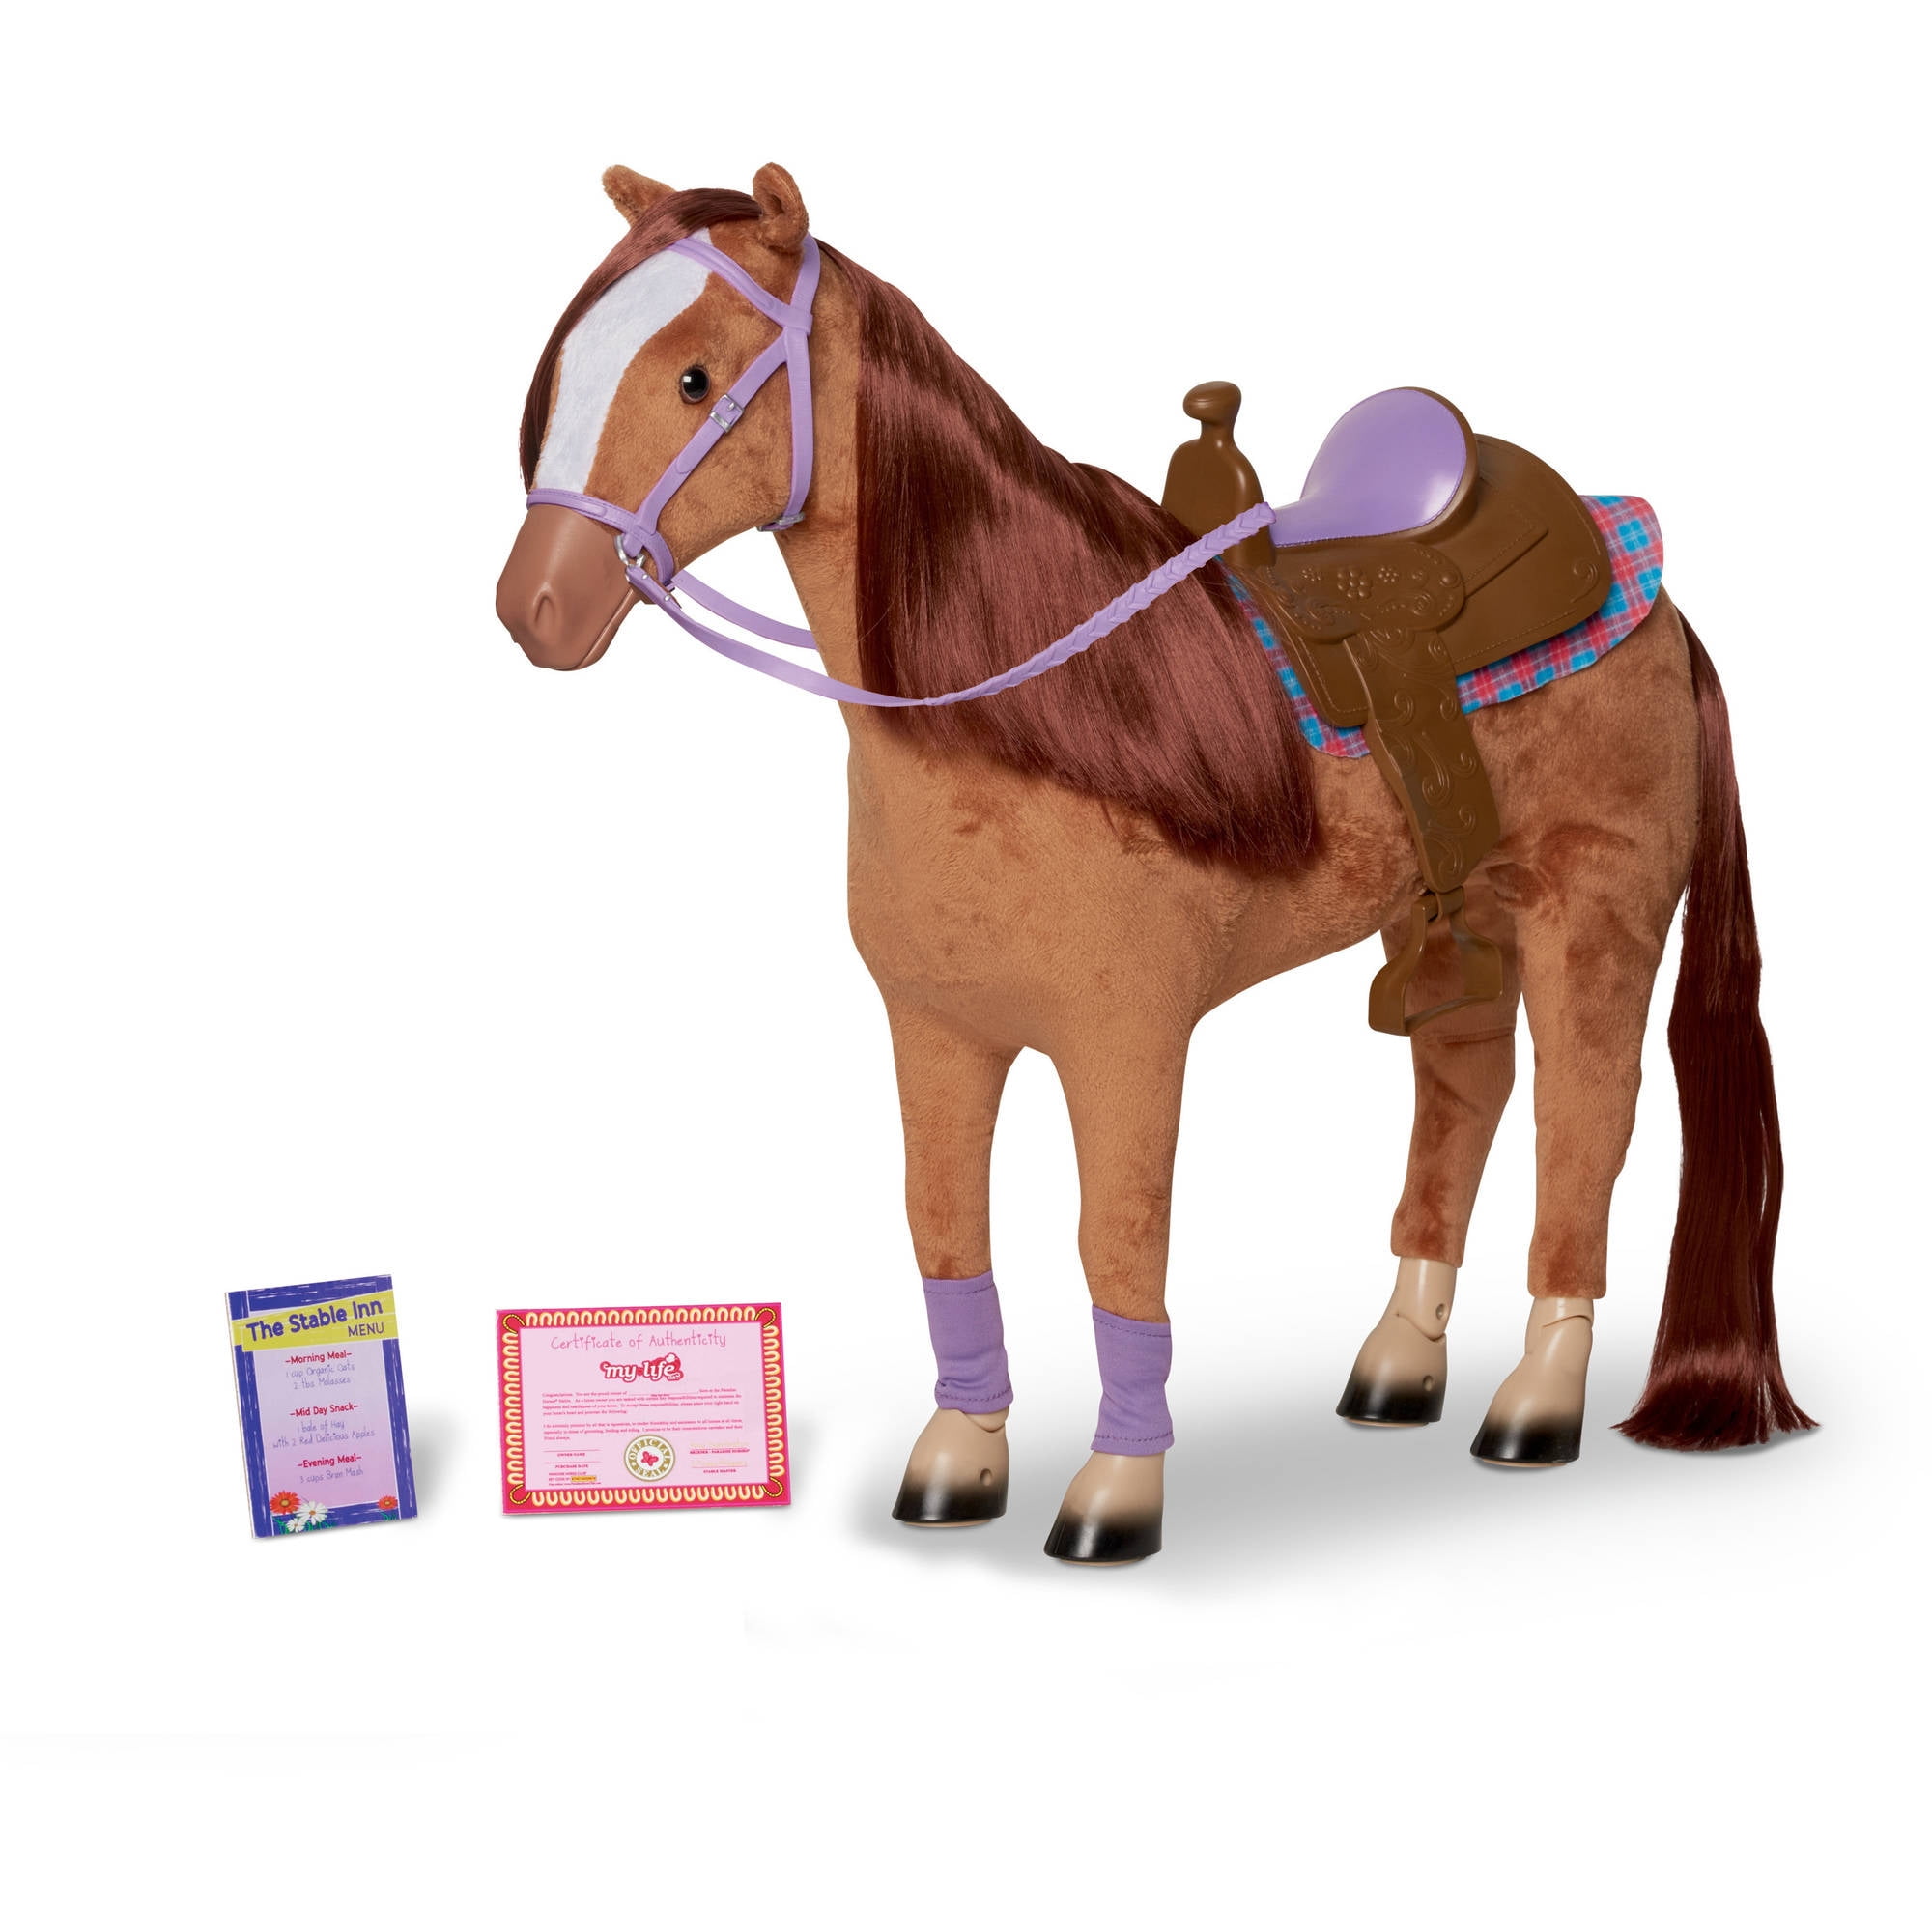 chestnut horse ride on toy